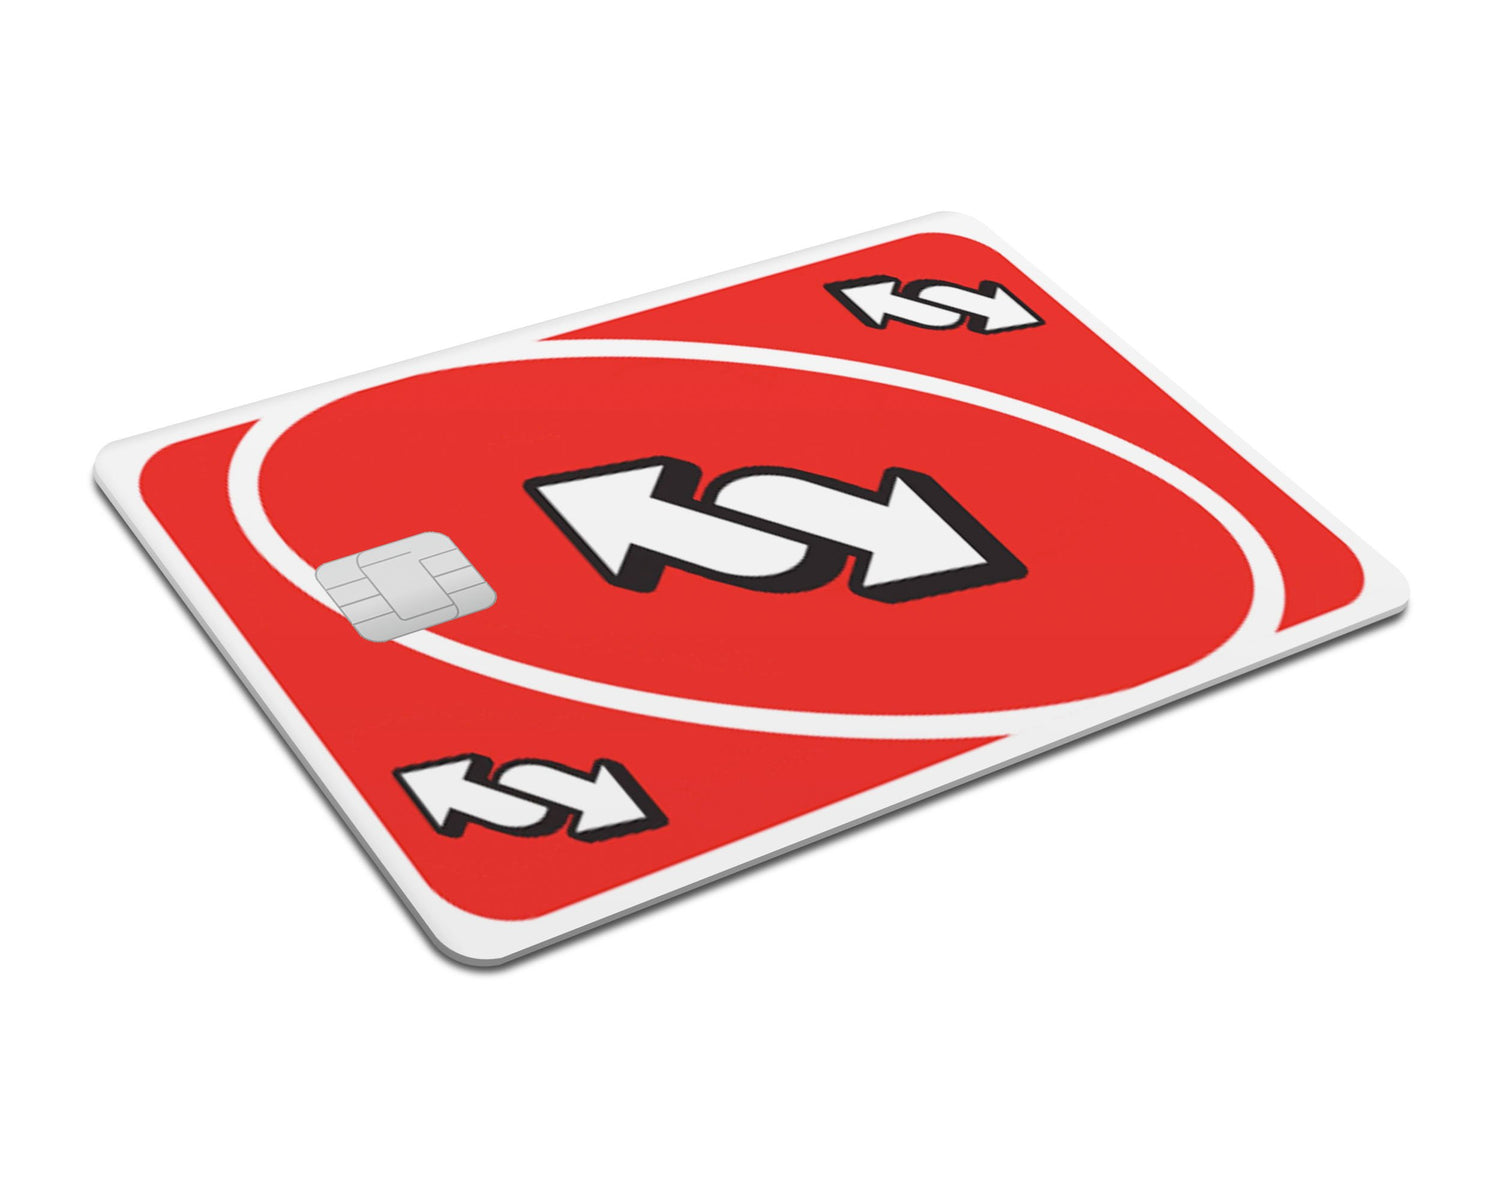 Blue Reverse Card Uno Sticker - Blue Reverse Card Uno Mattel163Games -  Discover & Share GIFs